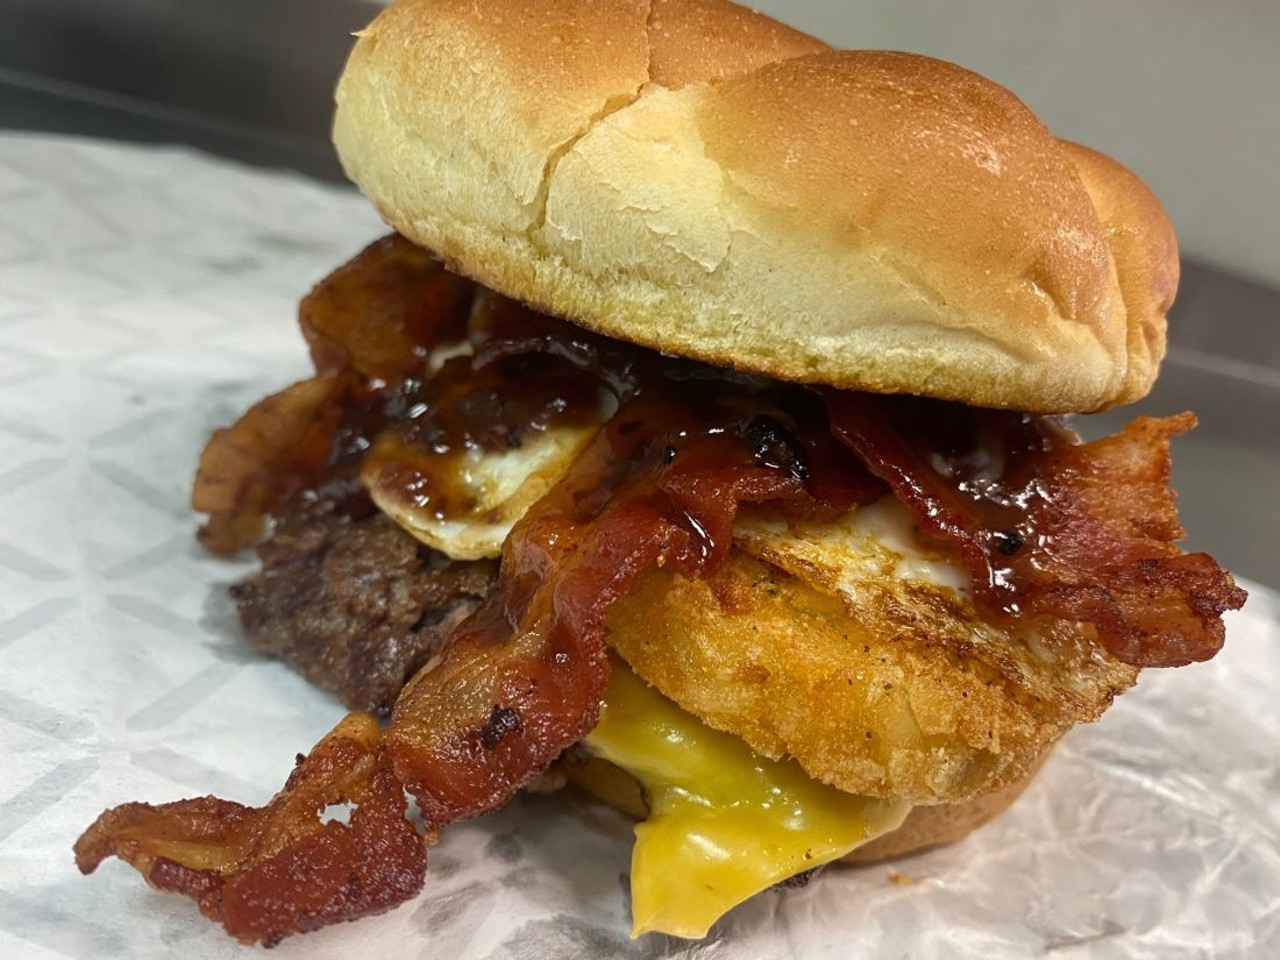 Busloop Burgers
(10462 St. Charles Rock Road St. Ann, MO 63074)
Photo credit: Busloop Burgers / @busloopburgers on Instagram